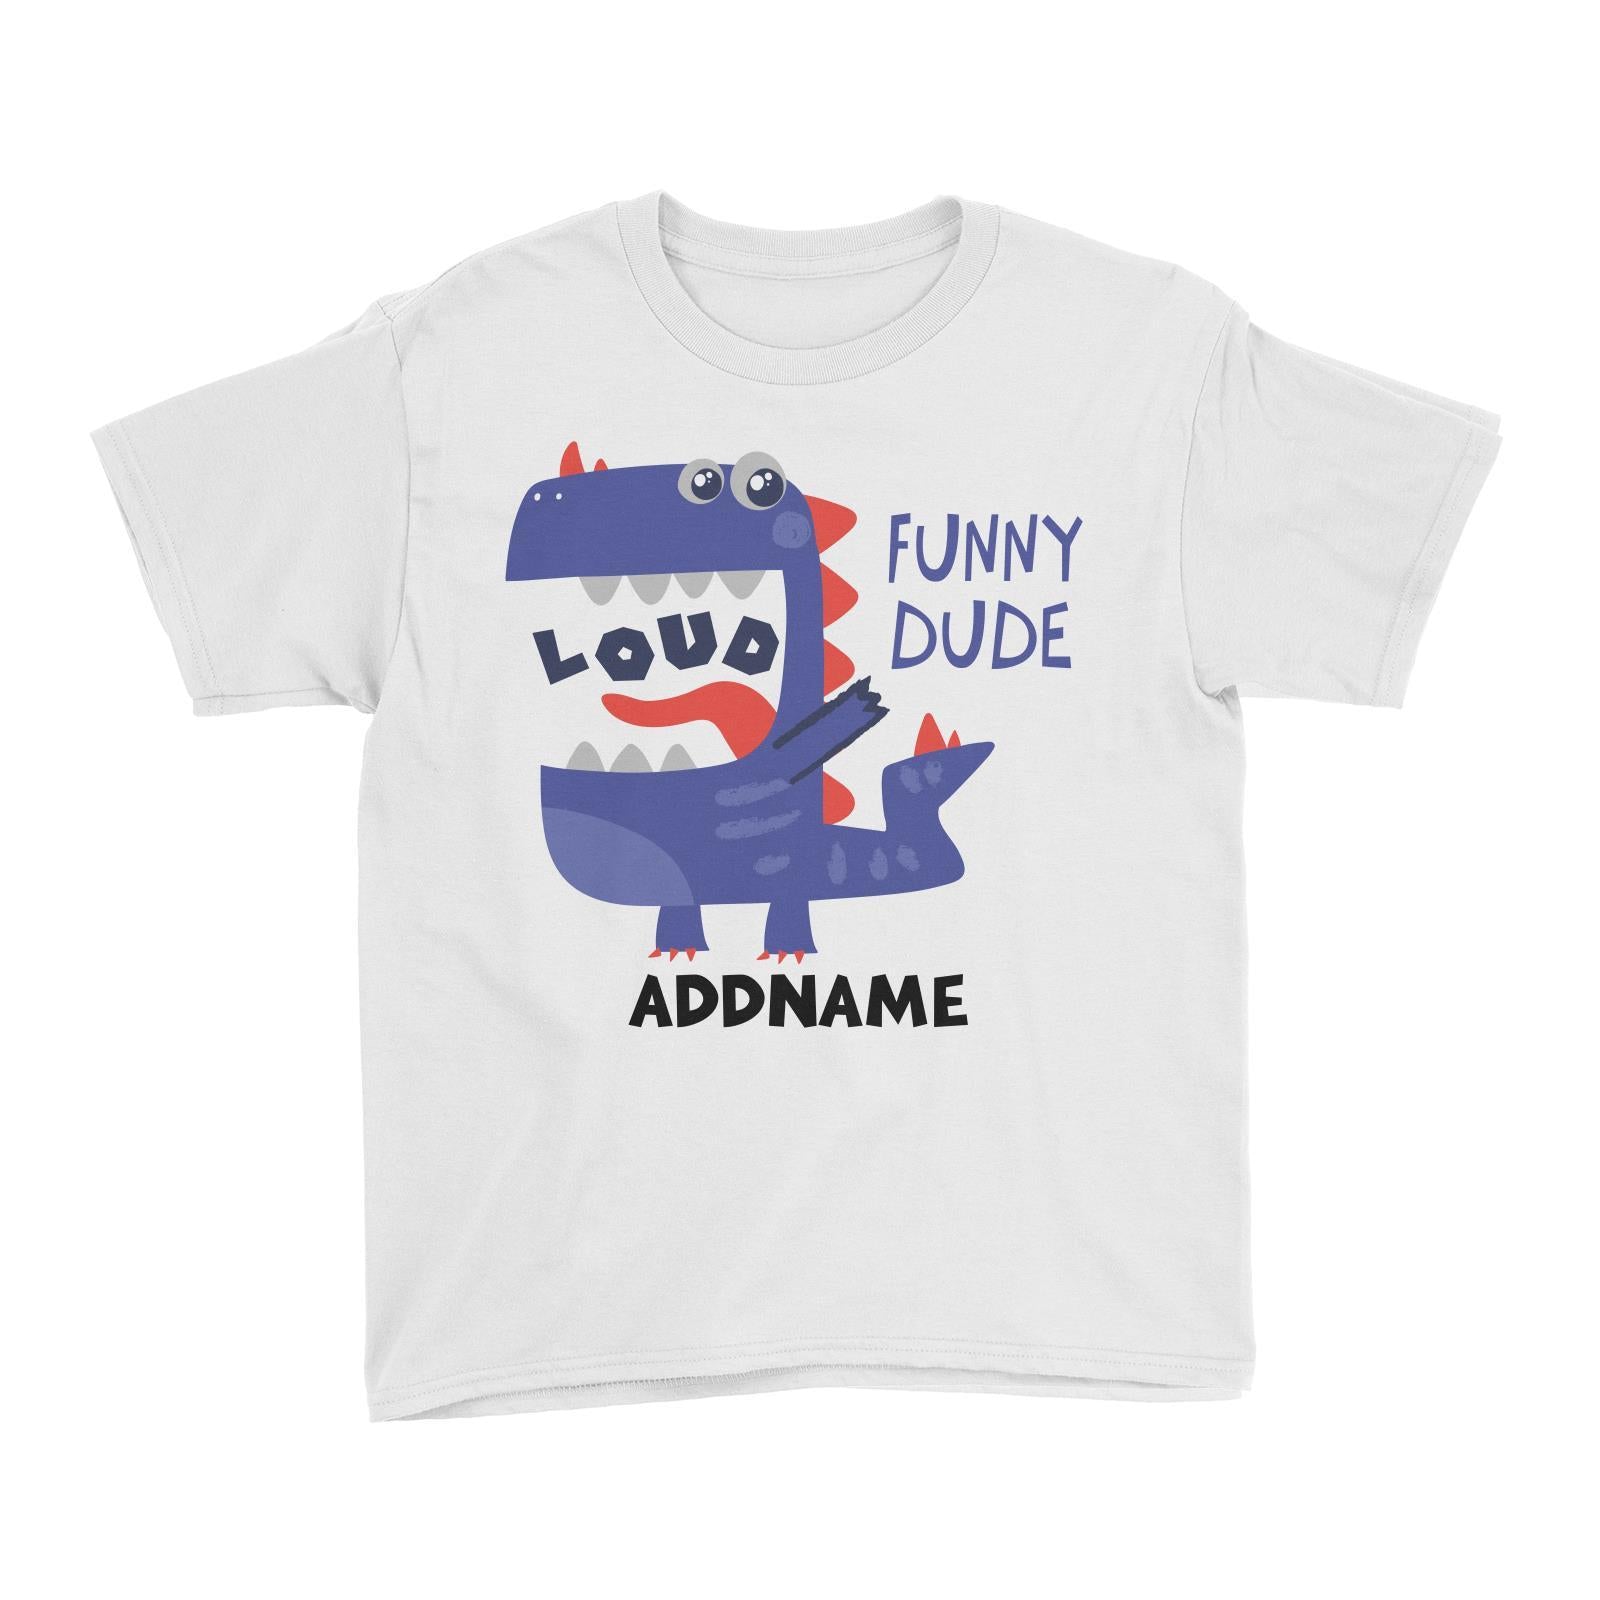 Loud Funny Dude Dinosaur Addname Kid's T-Shirt